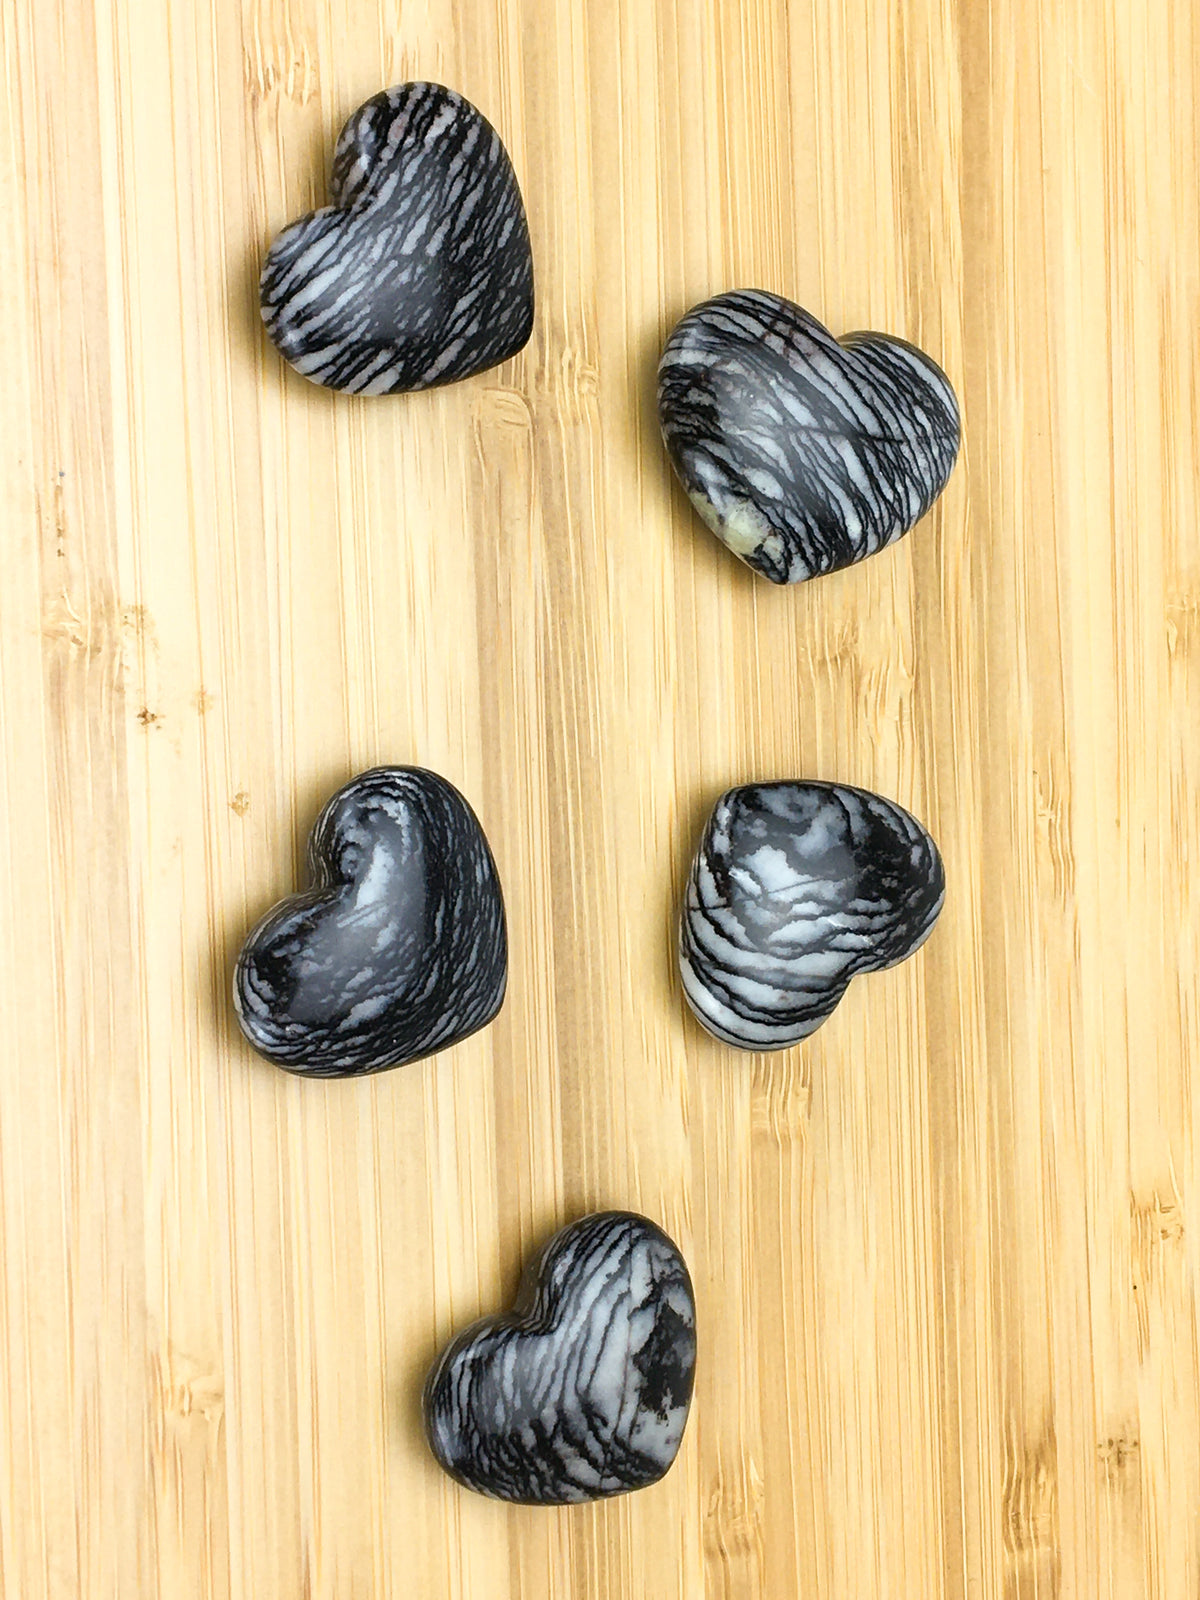 Five net jasper hearts on a light wood grain surface